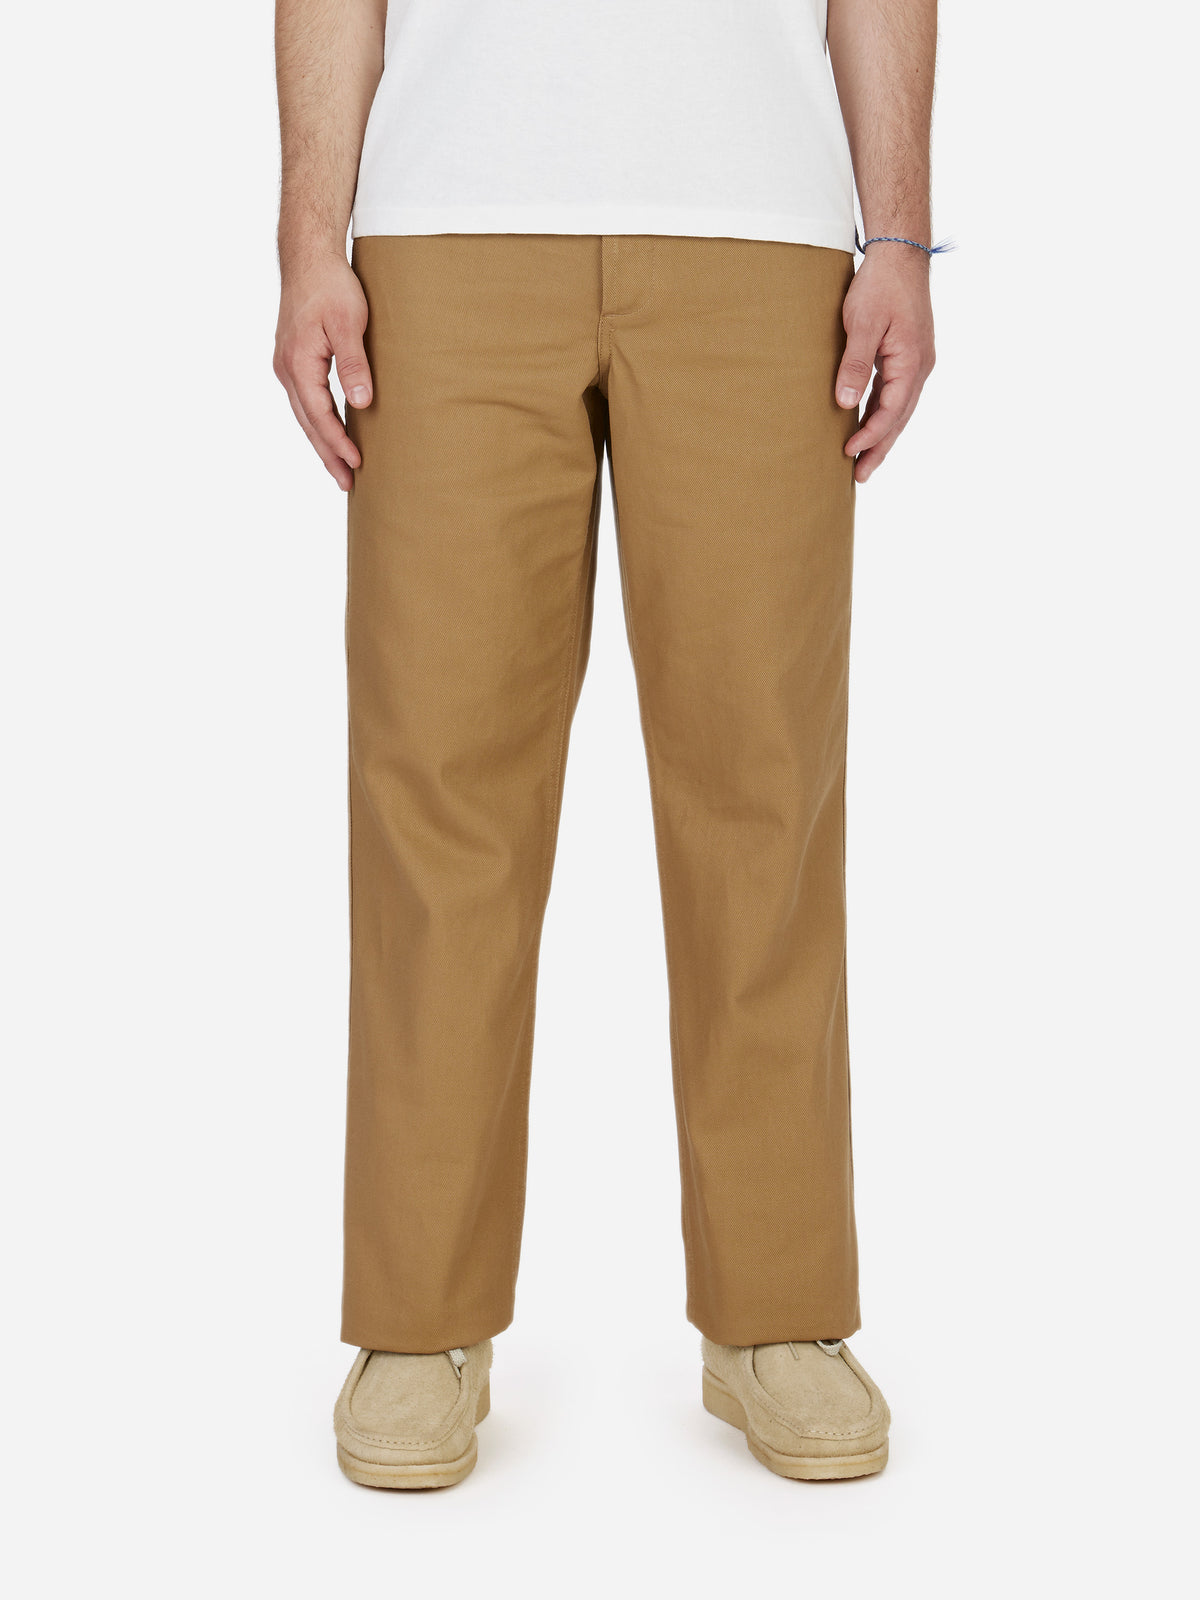 Jacquard Denim Carpenter Pants Size 31